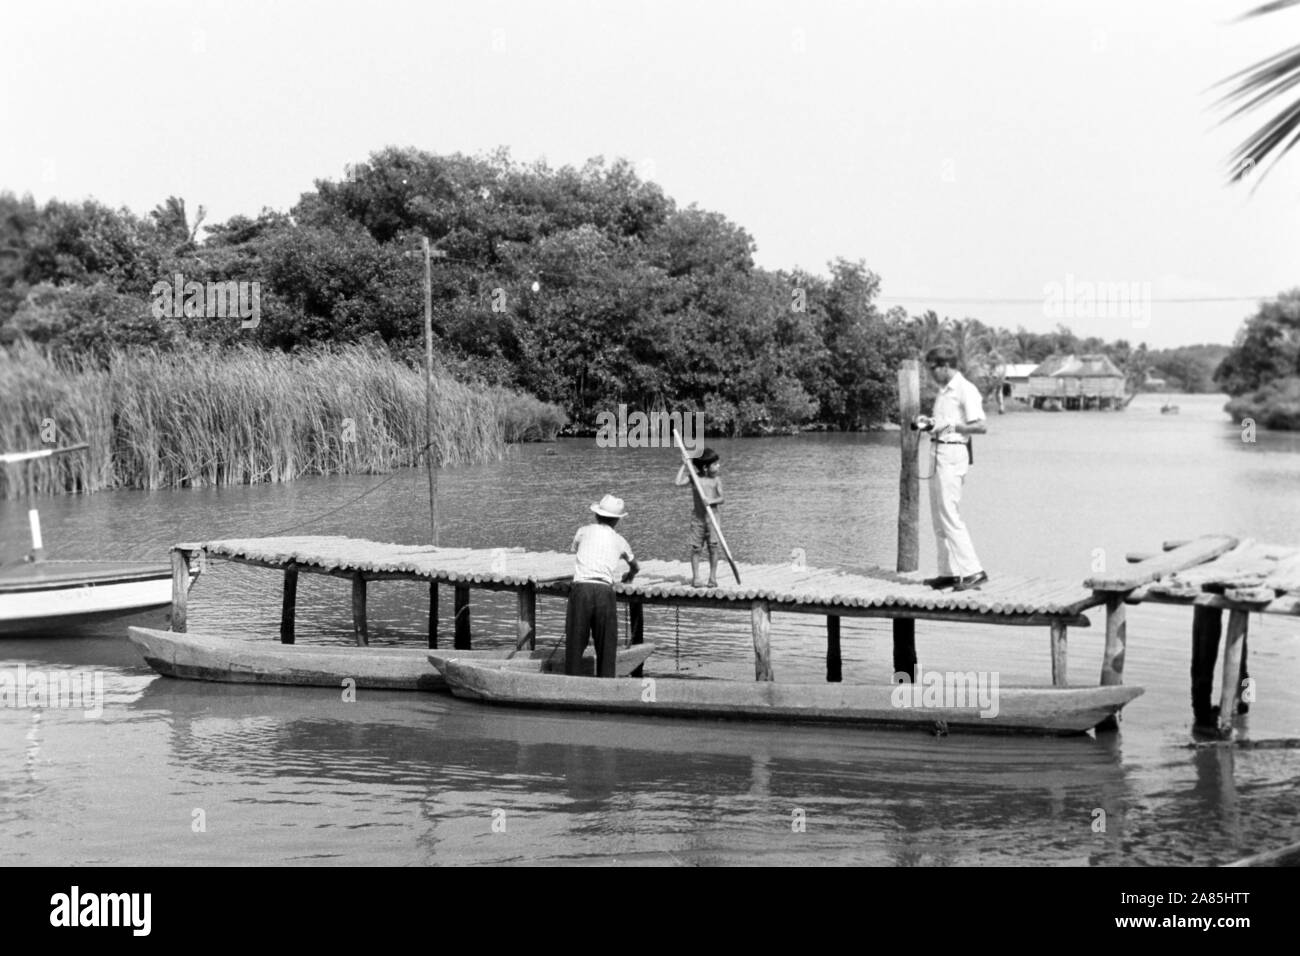 Laguna de Sinamaica am Maracaibo-See, Venezuela, 1960 er. Laguna de Sinamaica au Lac Maracaibo, Venezuela, 1960. Banque D'Images